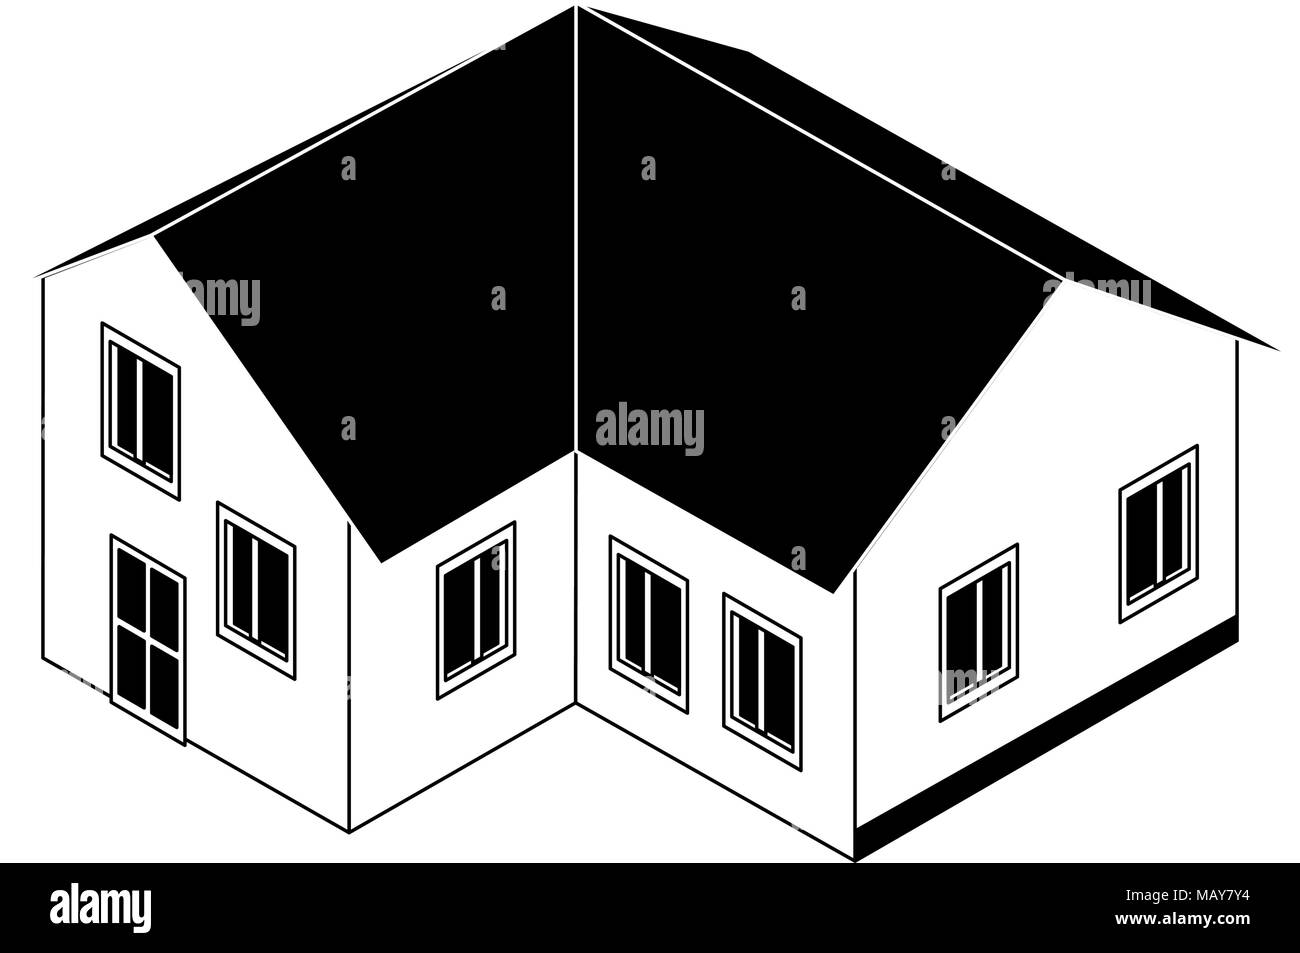 Isometric House Black and White Stock Photos & Images - Alamy